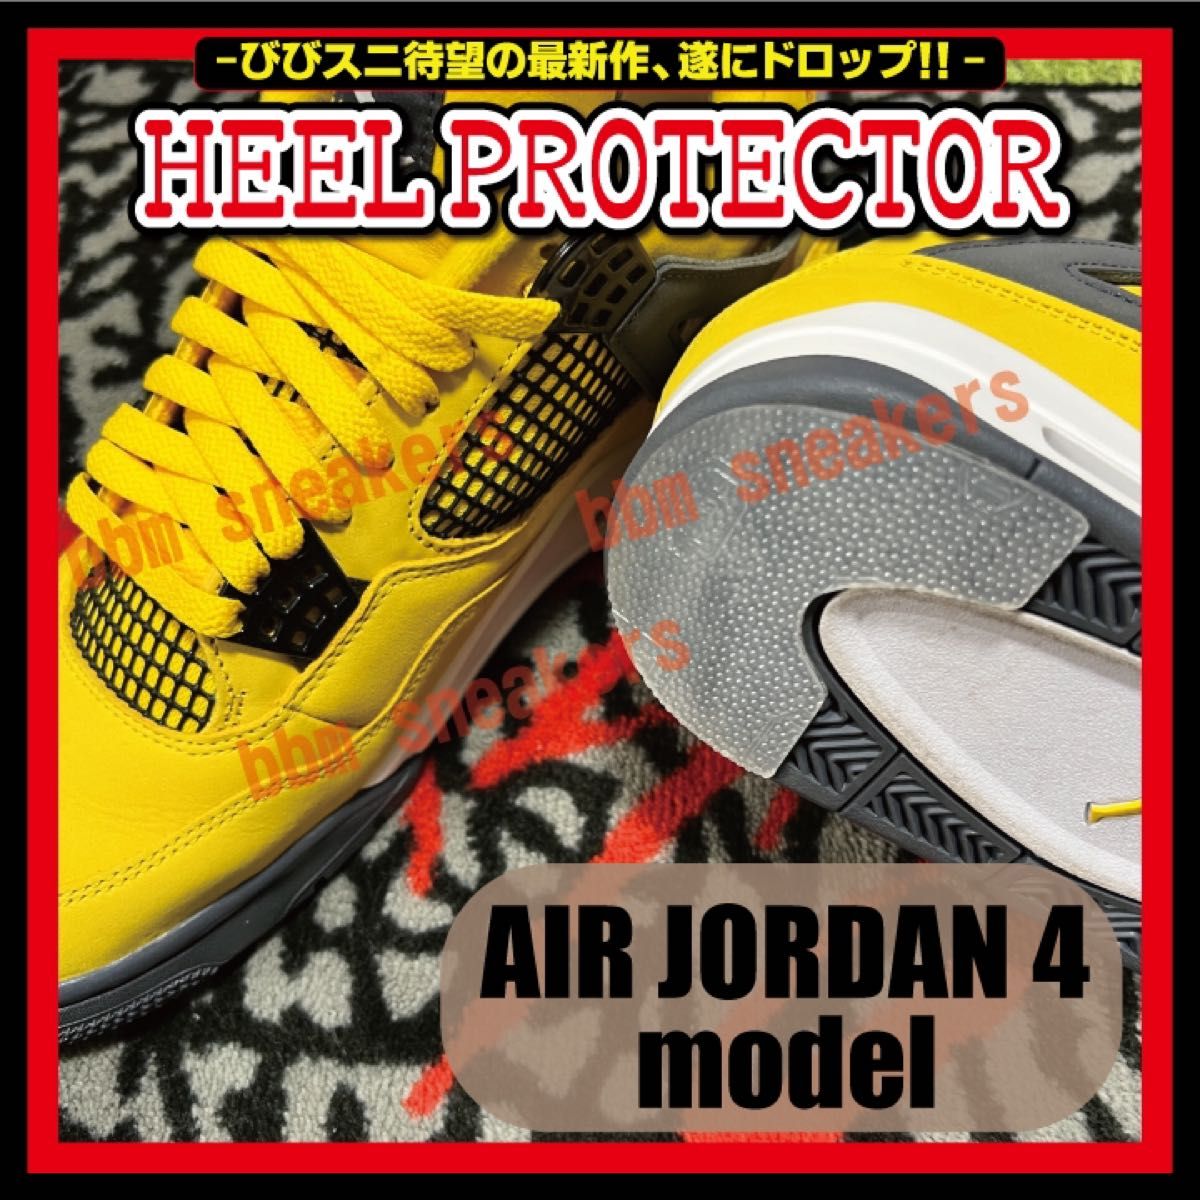 air jordan 4 モデル ヒールプロテクター AJ4 ソール ガード アマ